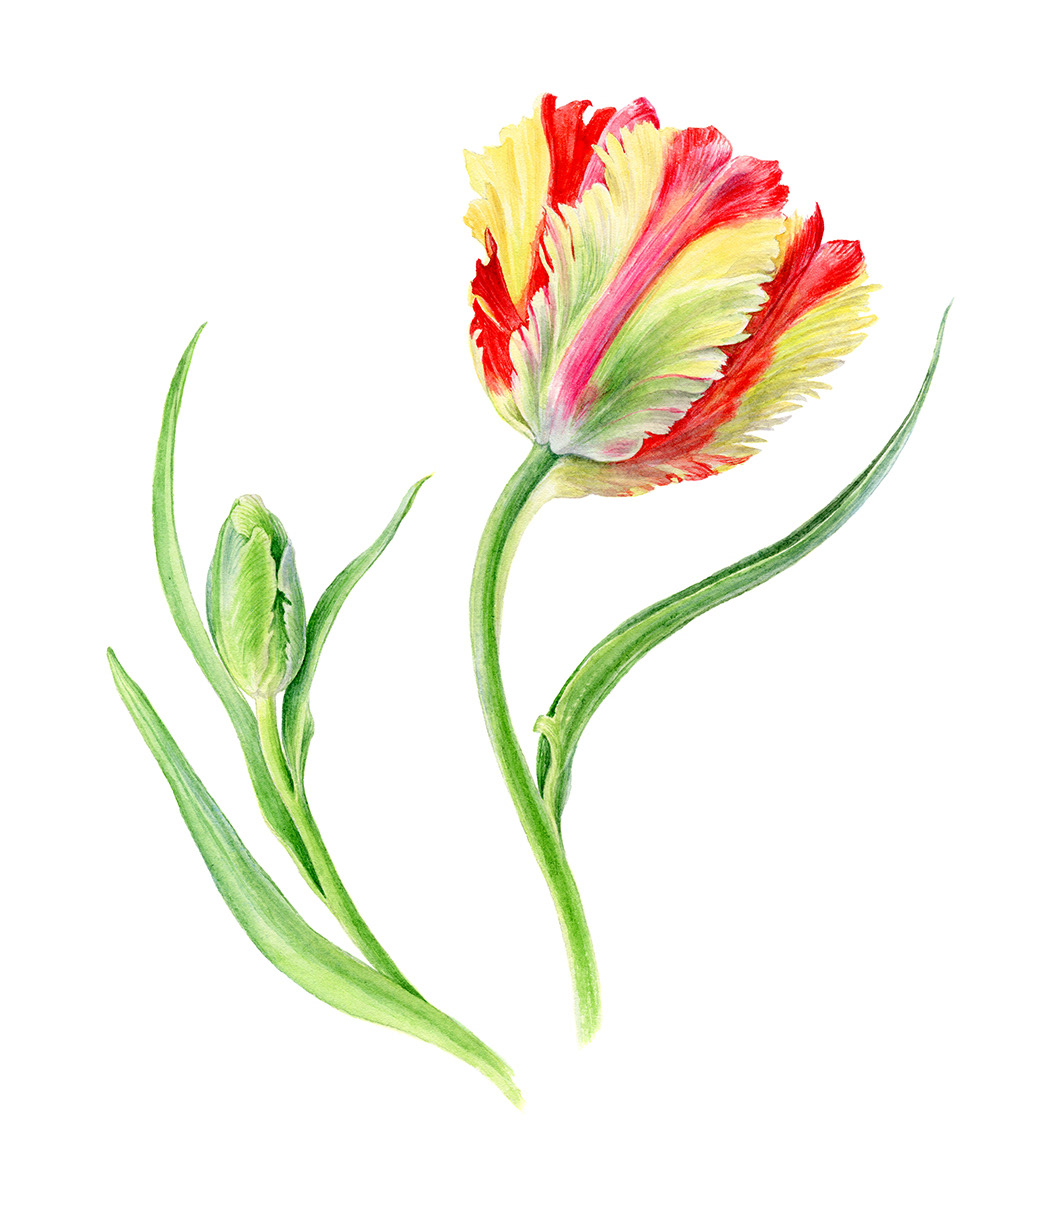 Anna Suprunenko - Spring Flowers